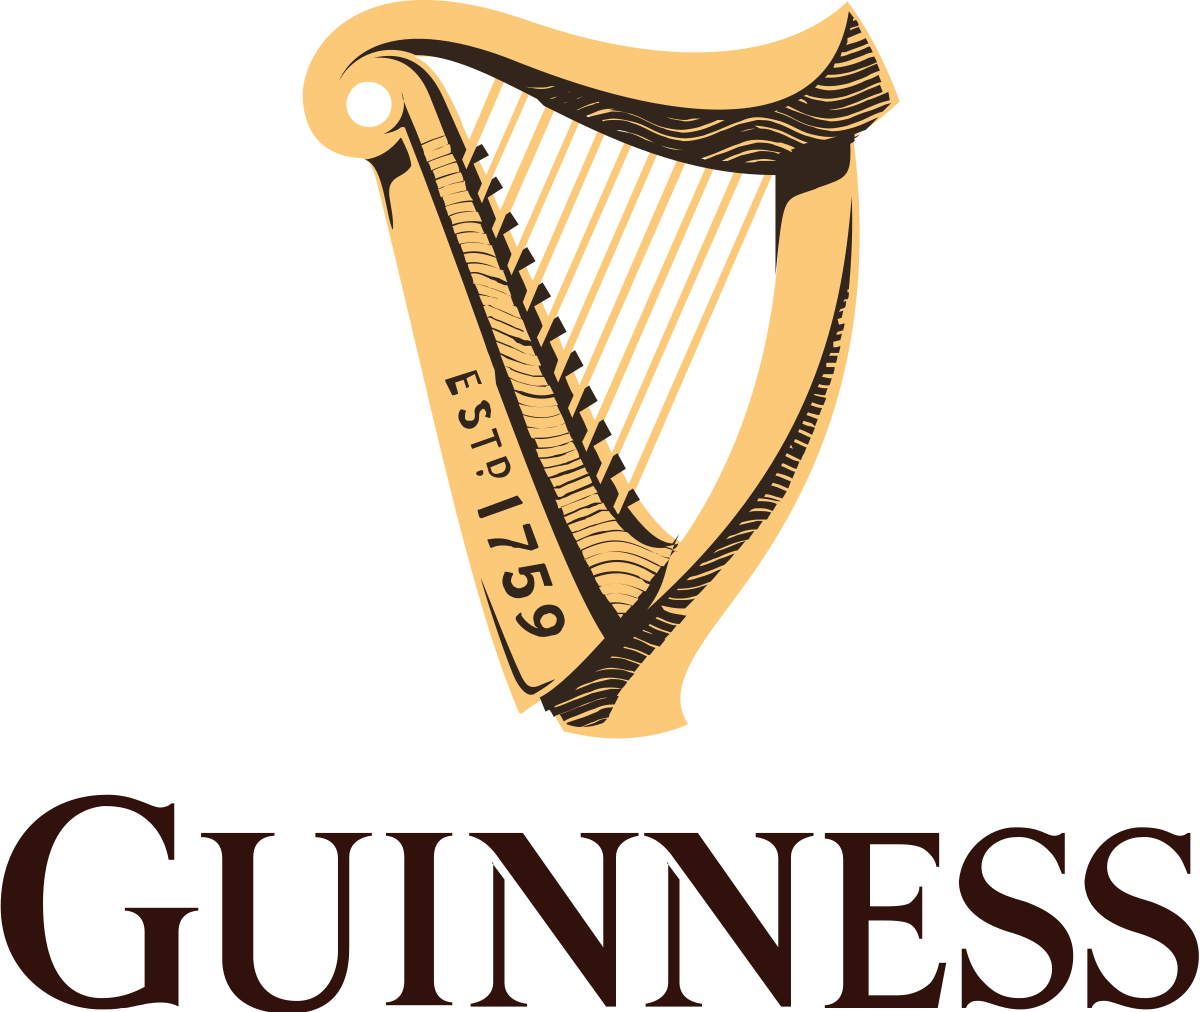 Guinness - Wikipedia